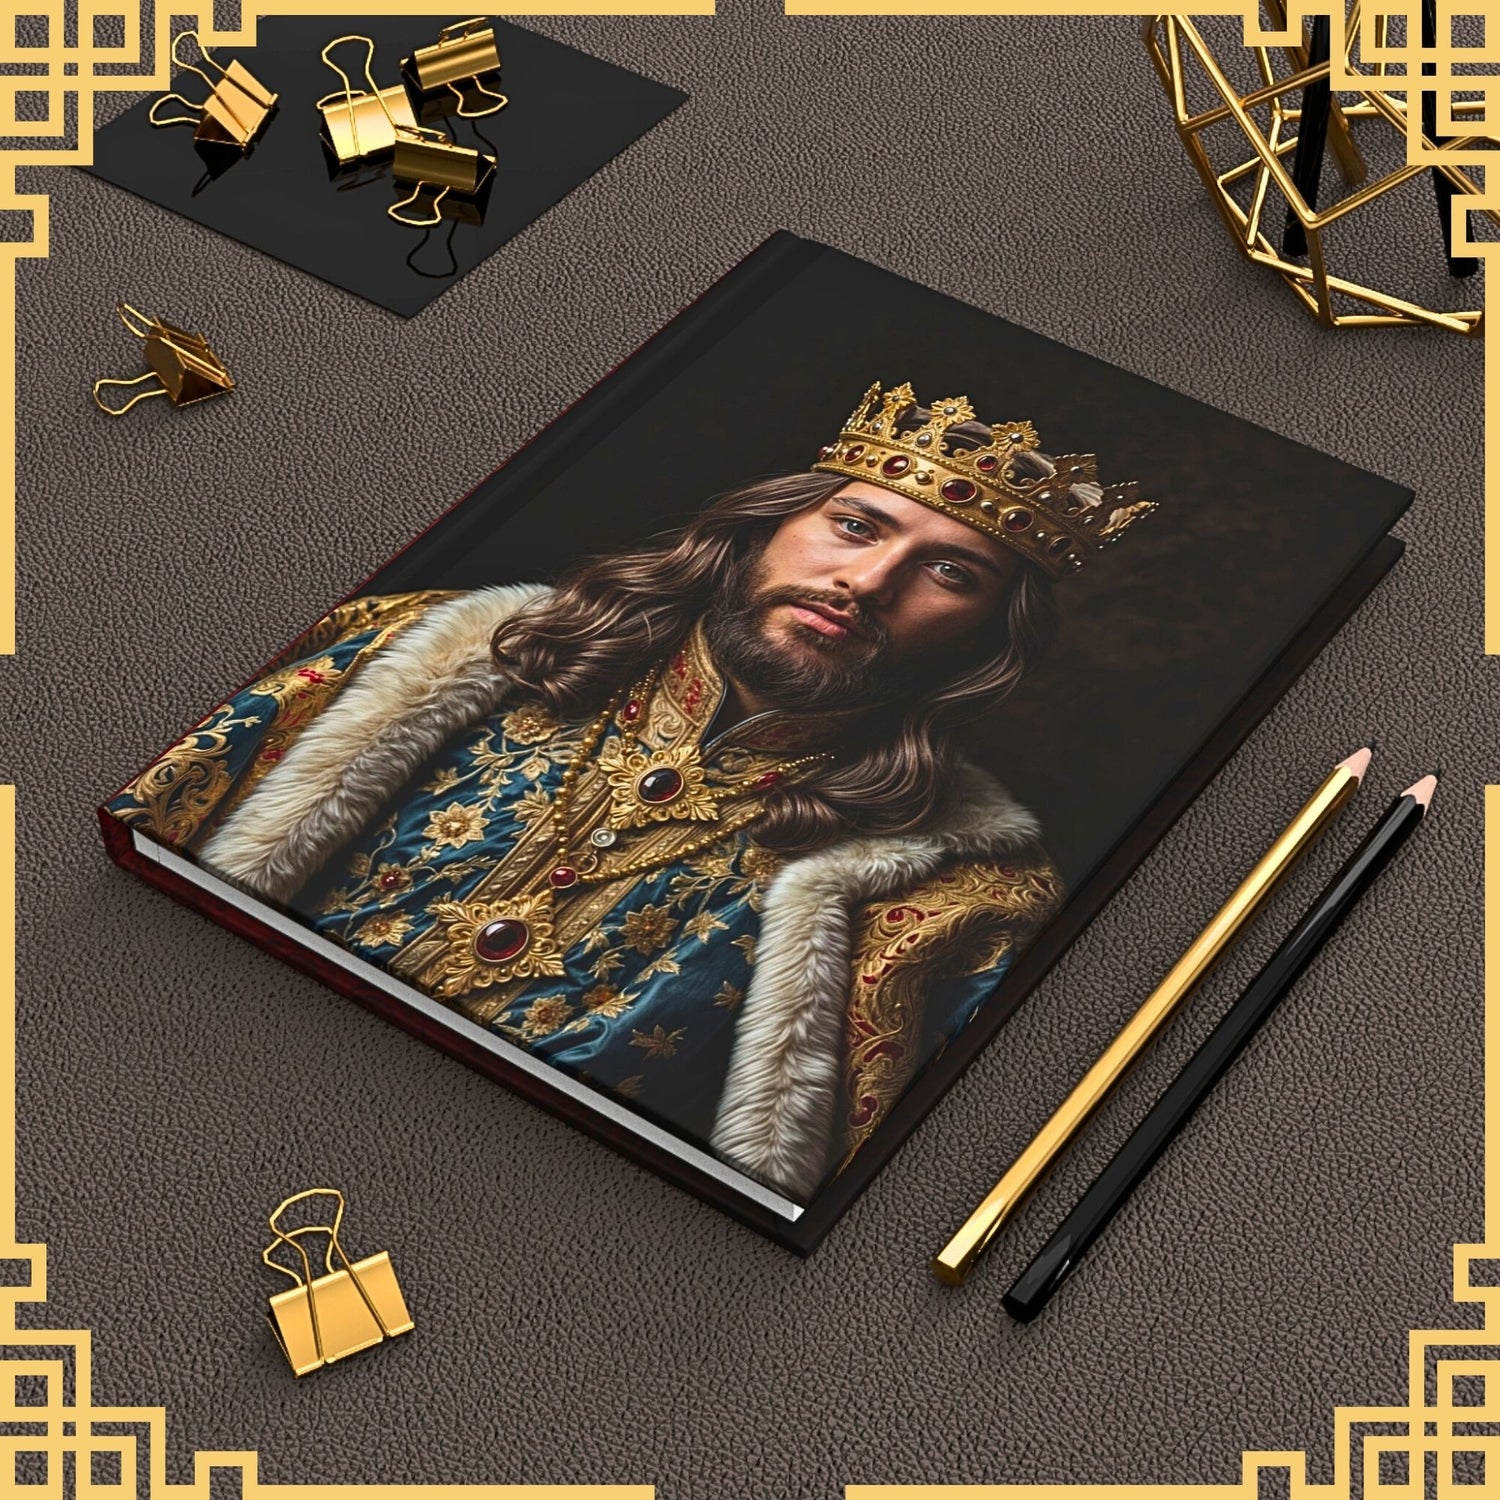 6. Custom journal, personalize royal journal, custom royal journal